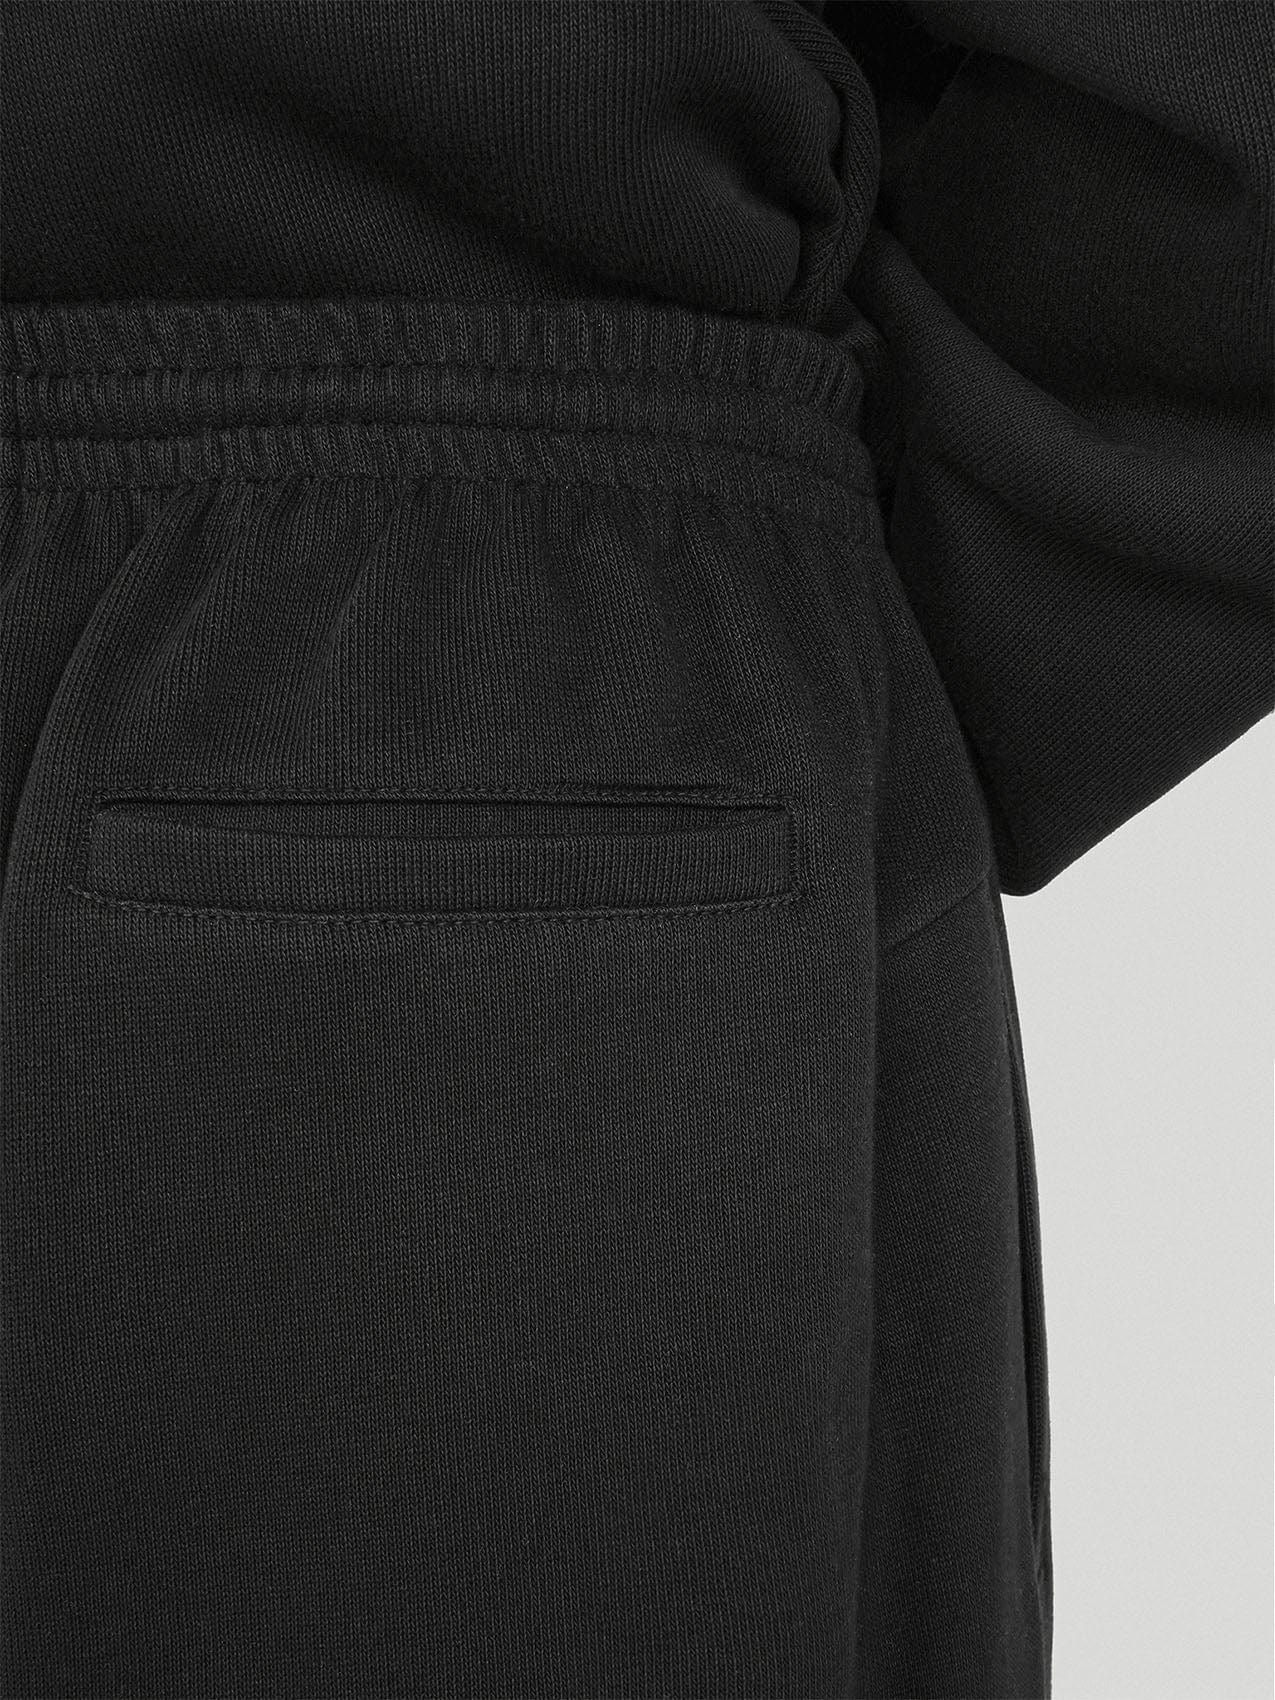 UNDERWATER Essential Jogger Black, premium urban and streetwear designers apparel on PROJECTISR.com, UNDERWATER